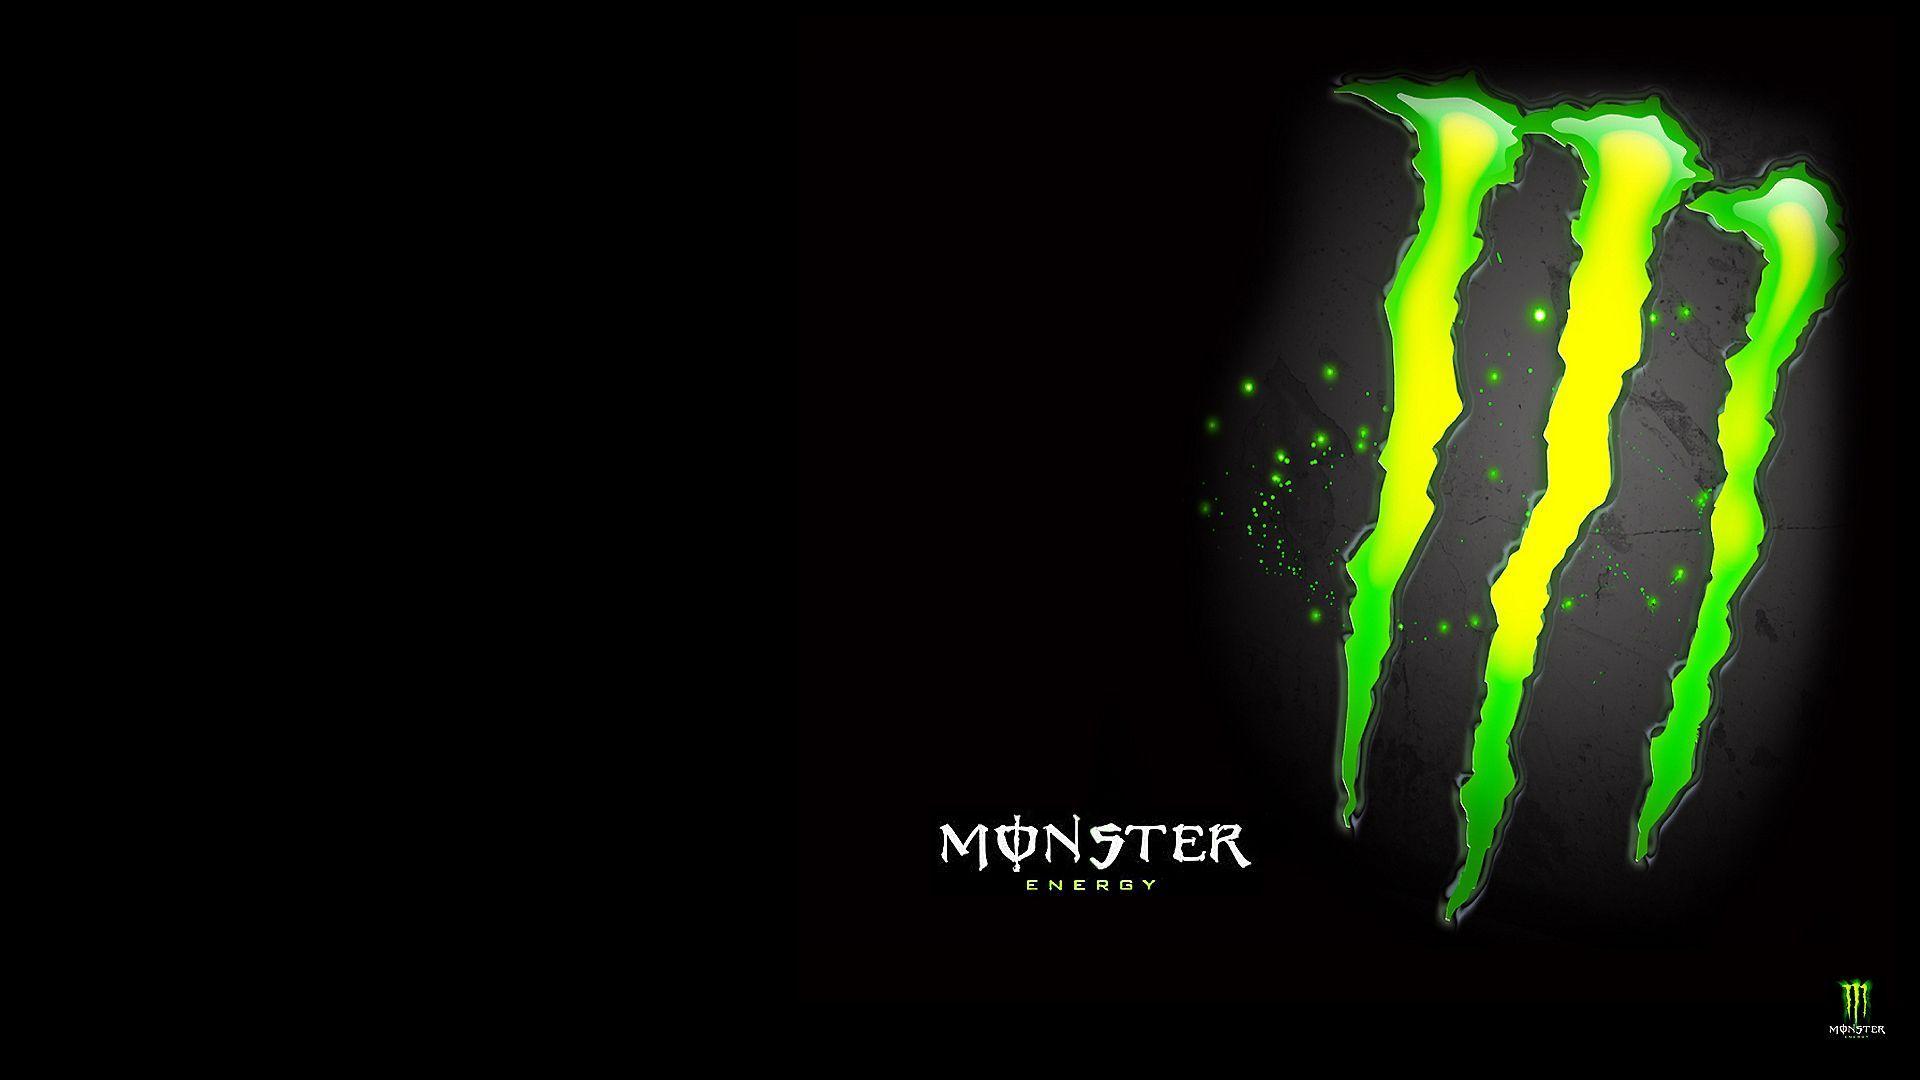 Monster Energy 4k Wallpapers Top Free Monster Energy 4k Backgrounds Wallpaperaccess